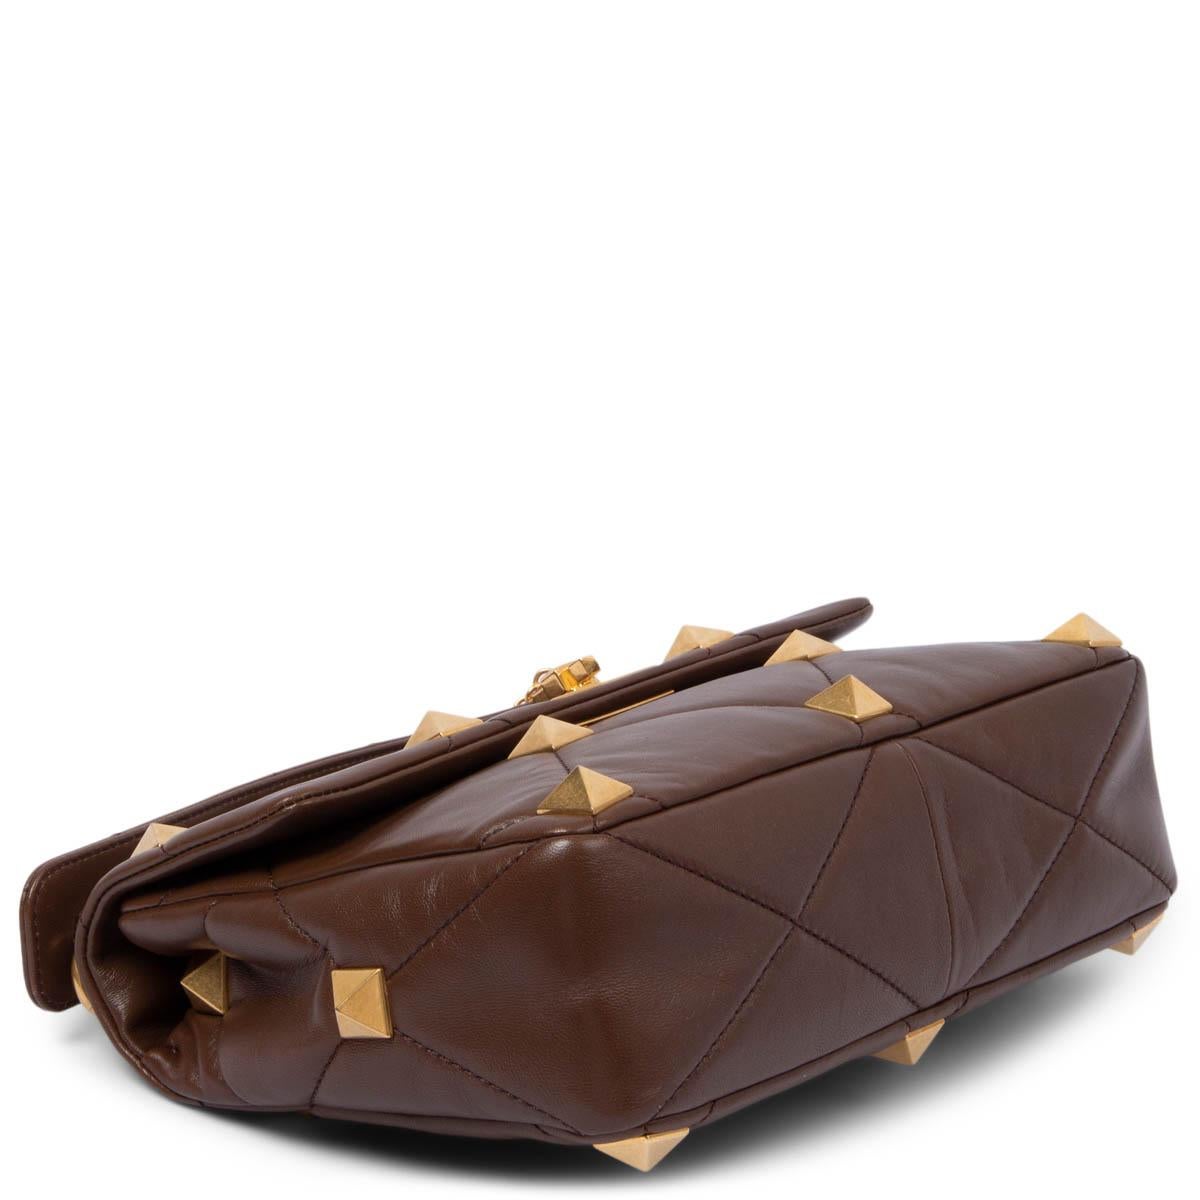 Women's VALENTINO brown nappa leather LARGE ROMAN STUD Shoulder Bag